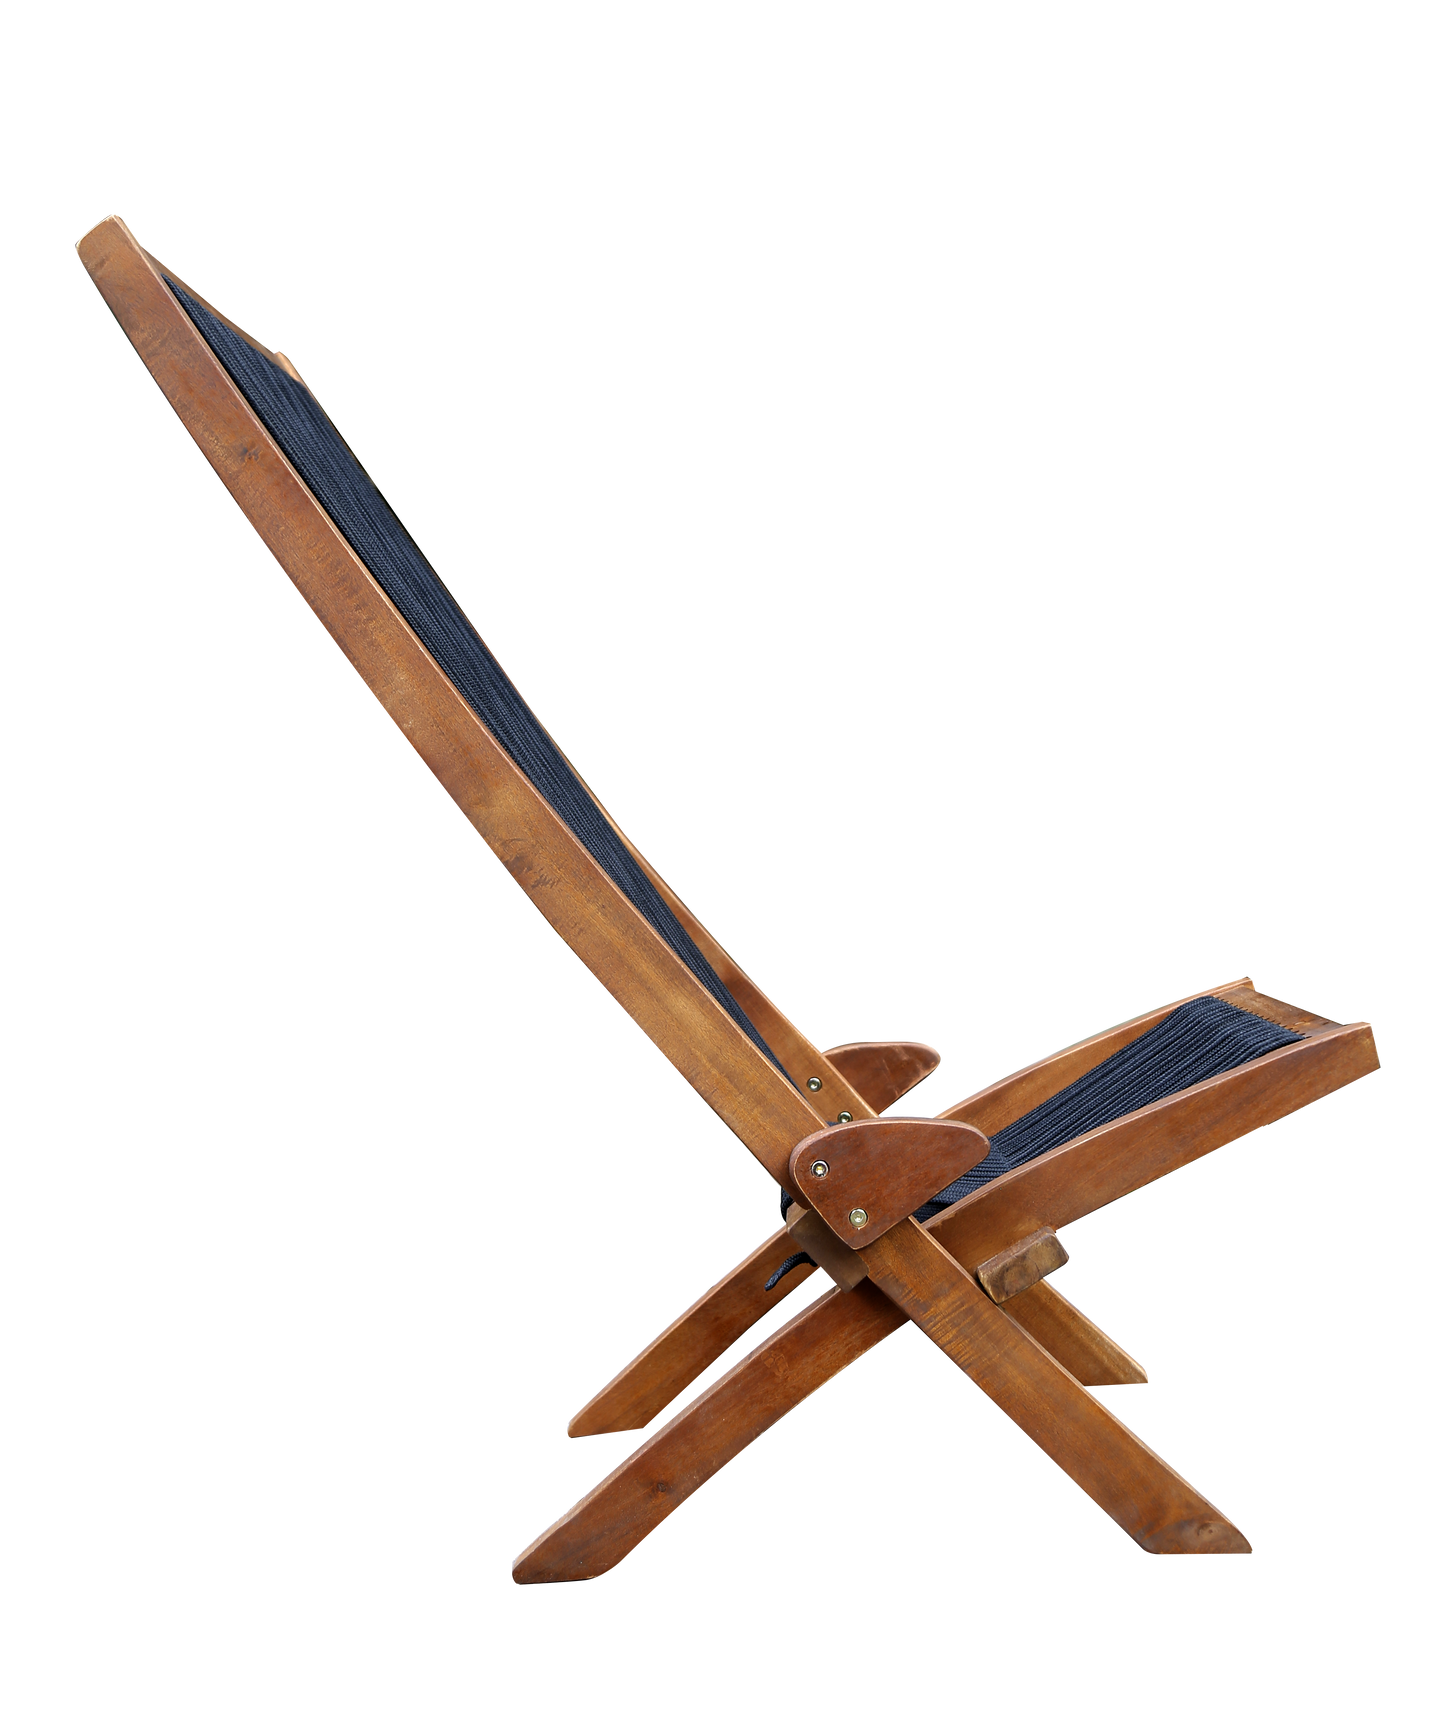 Folding Roping Wood Chair